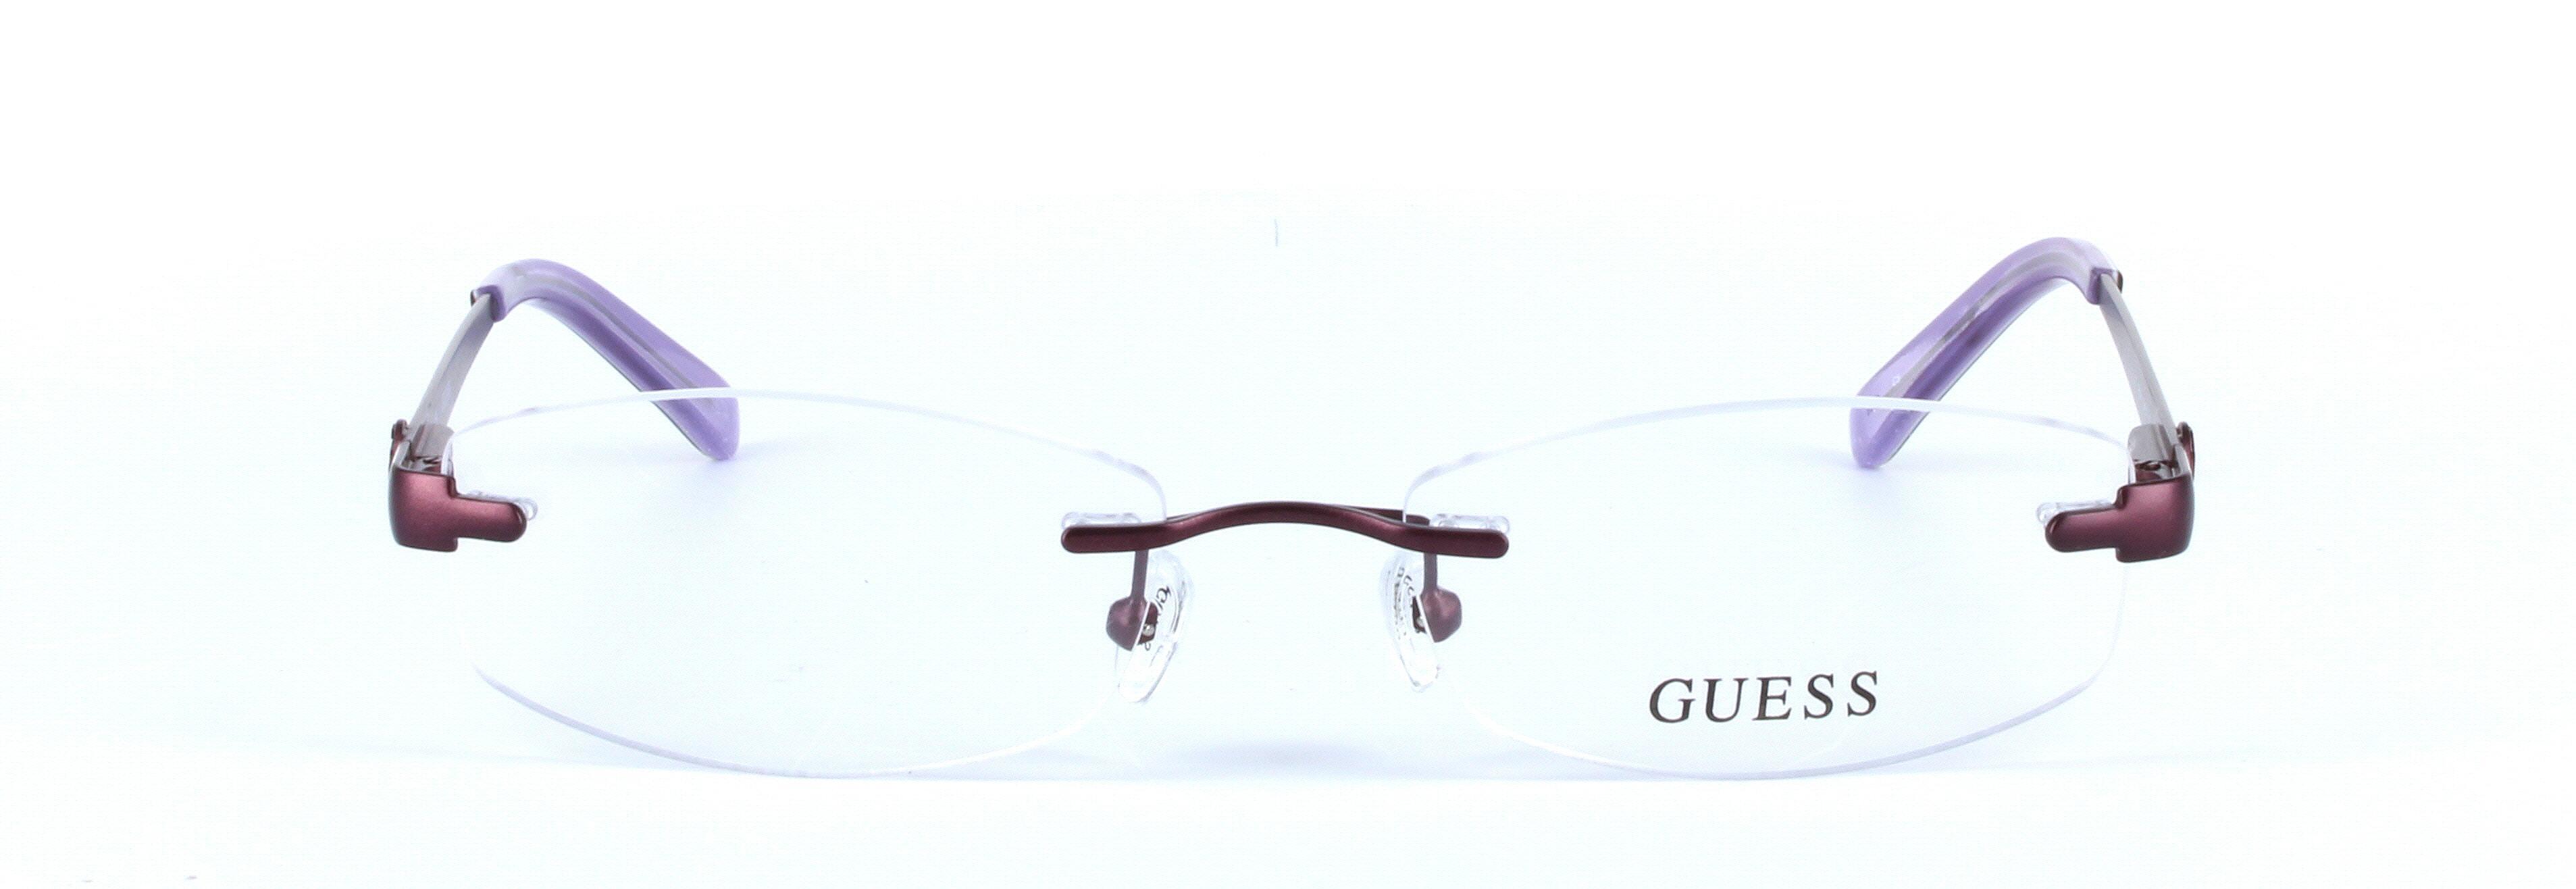 GUESS (GU2337-PUR) Purple Rimless Oval Rectangular Metal Glasses - Image View 5